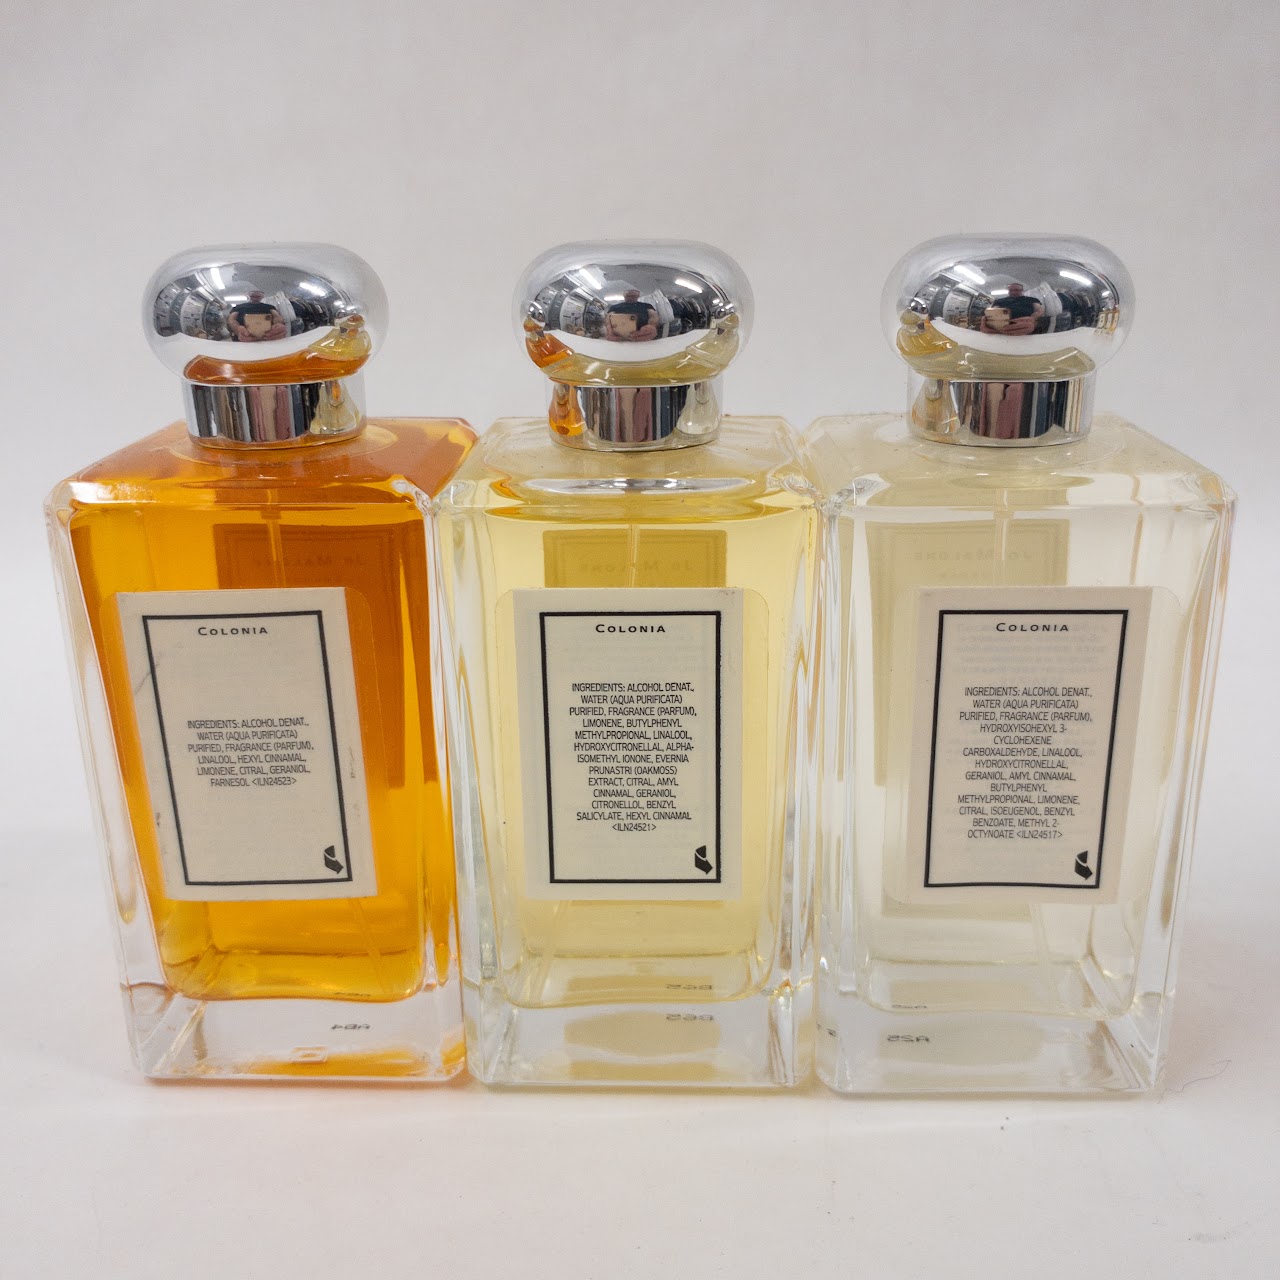 Joe Malone 100 ML Citrus Perfume Lot of Three